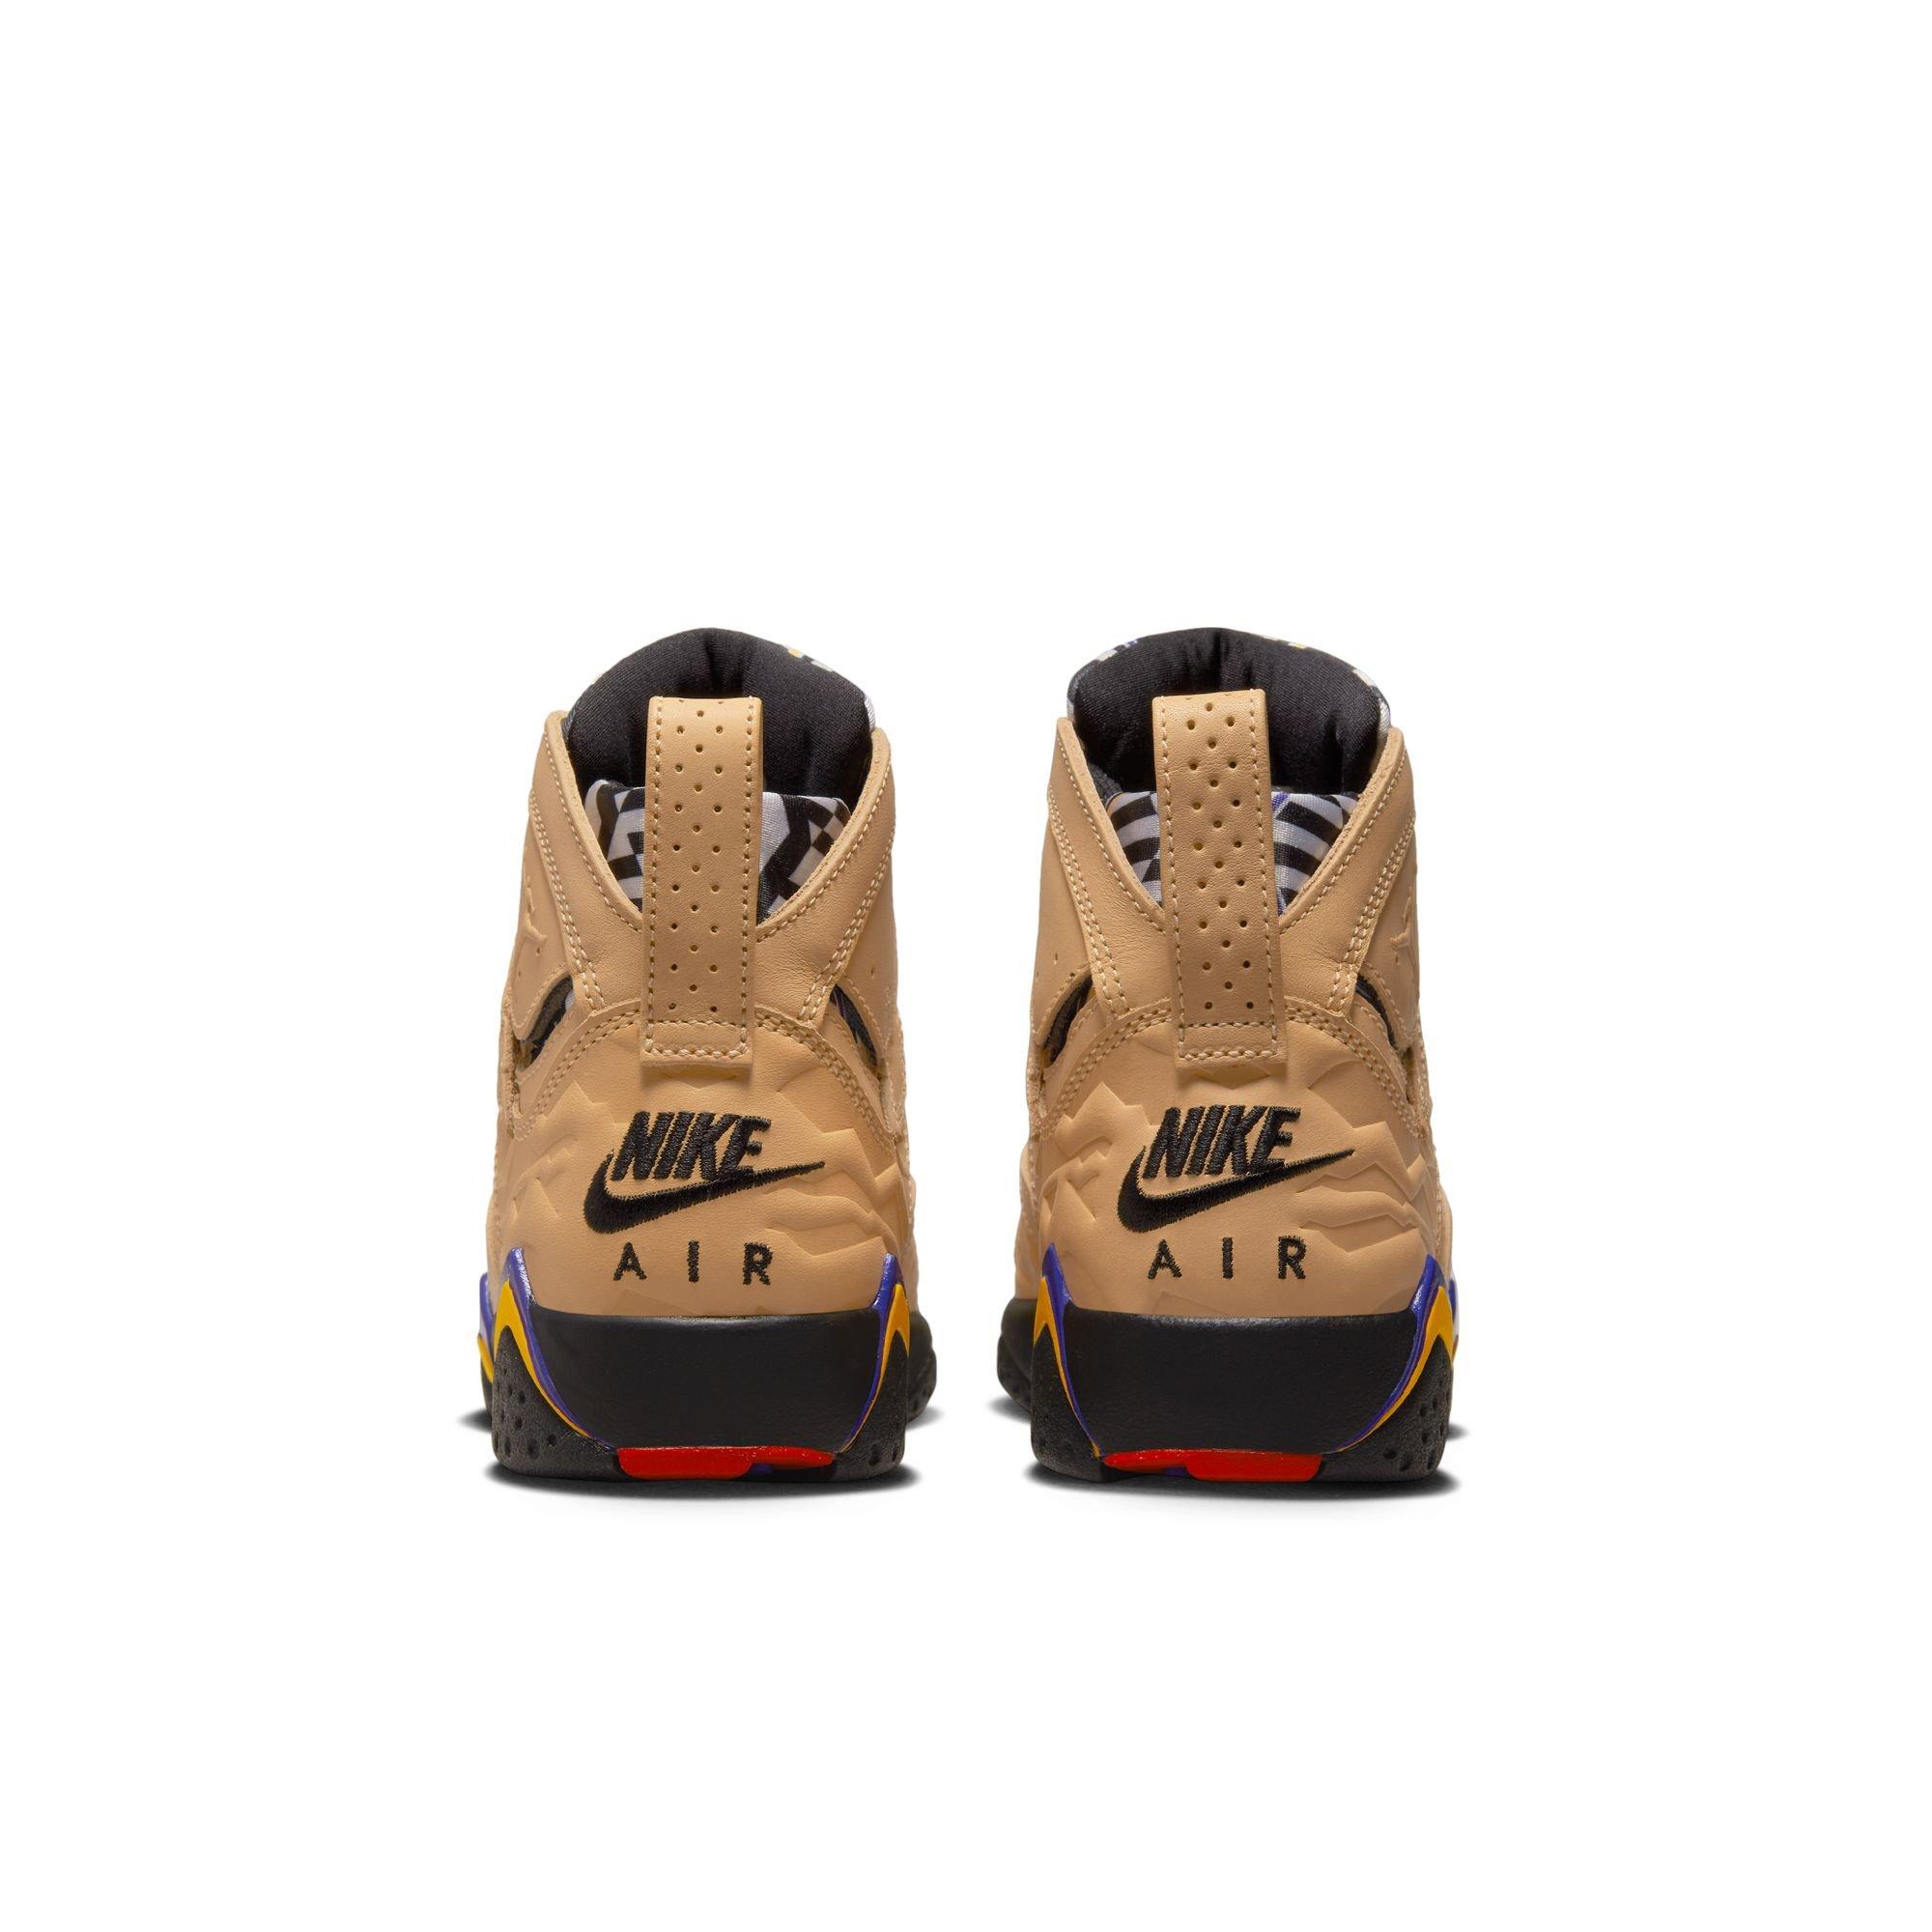 Sneaker Steal on X: AIR JORDAN 7 RETRO BUCKS “RAY ALLEN” $112.46    / X